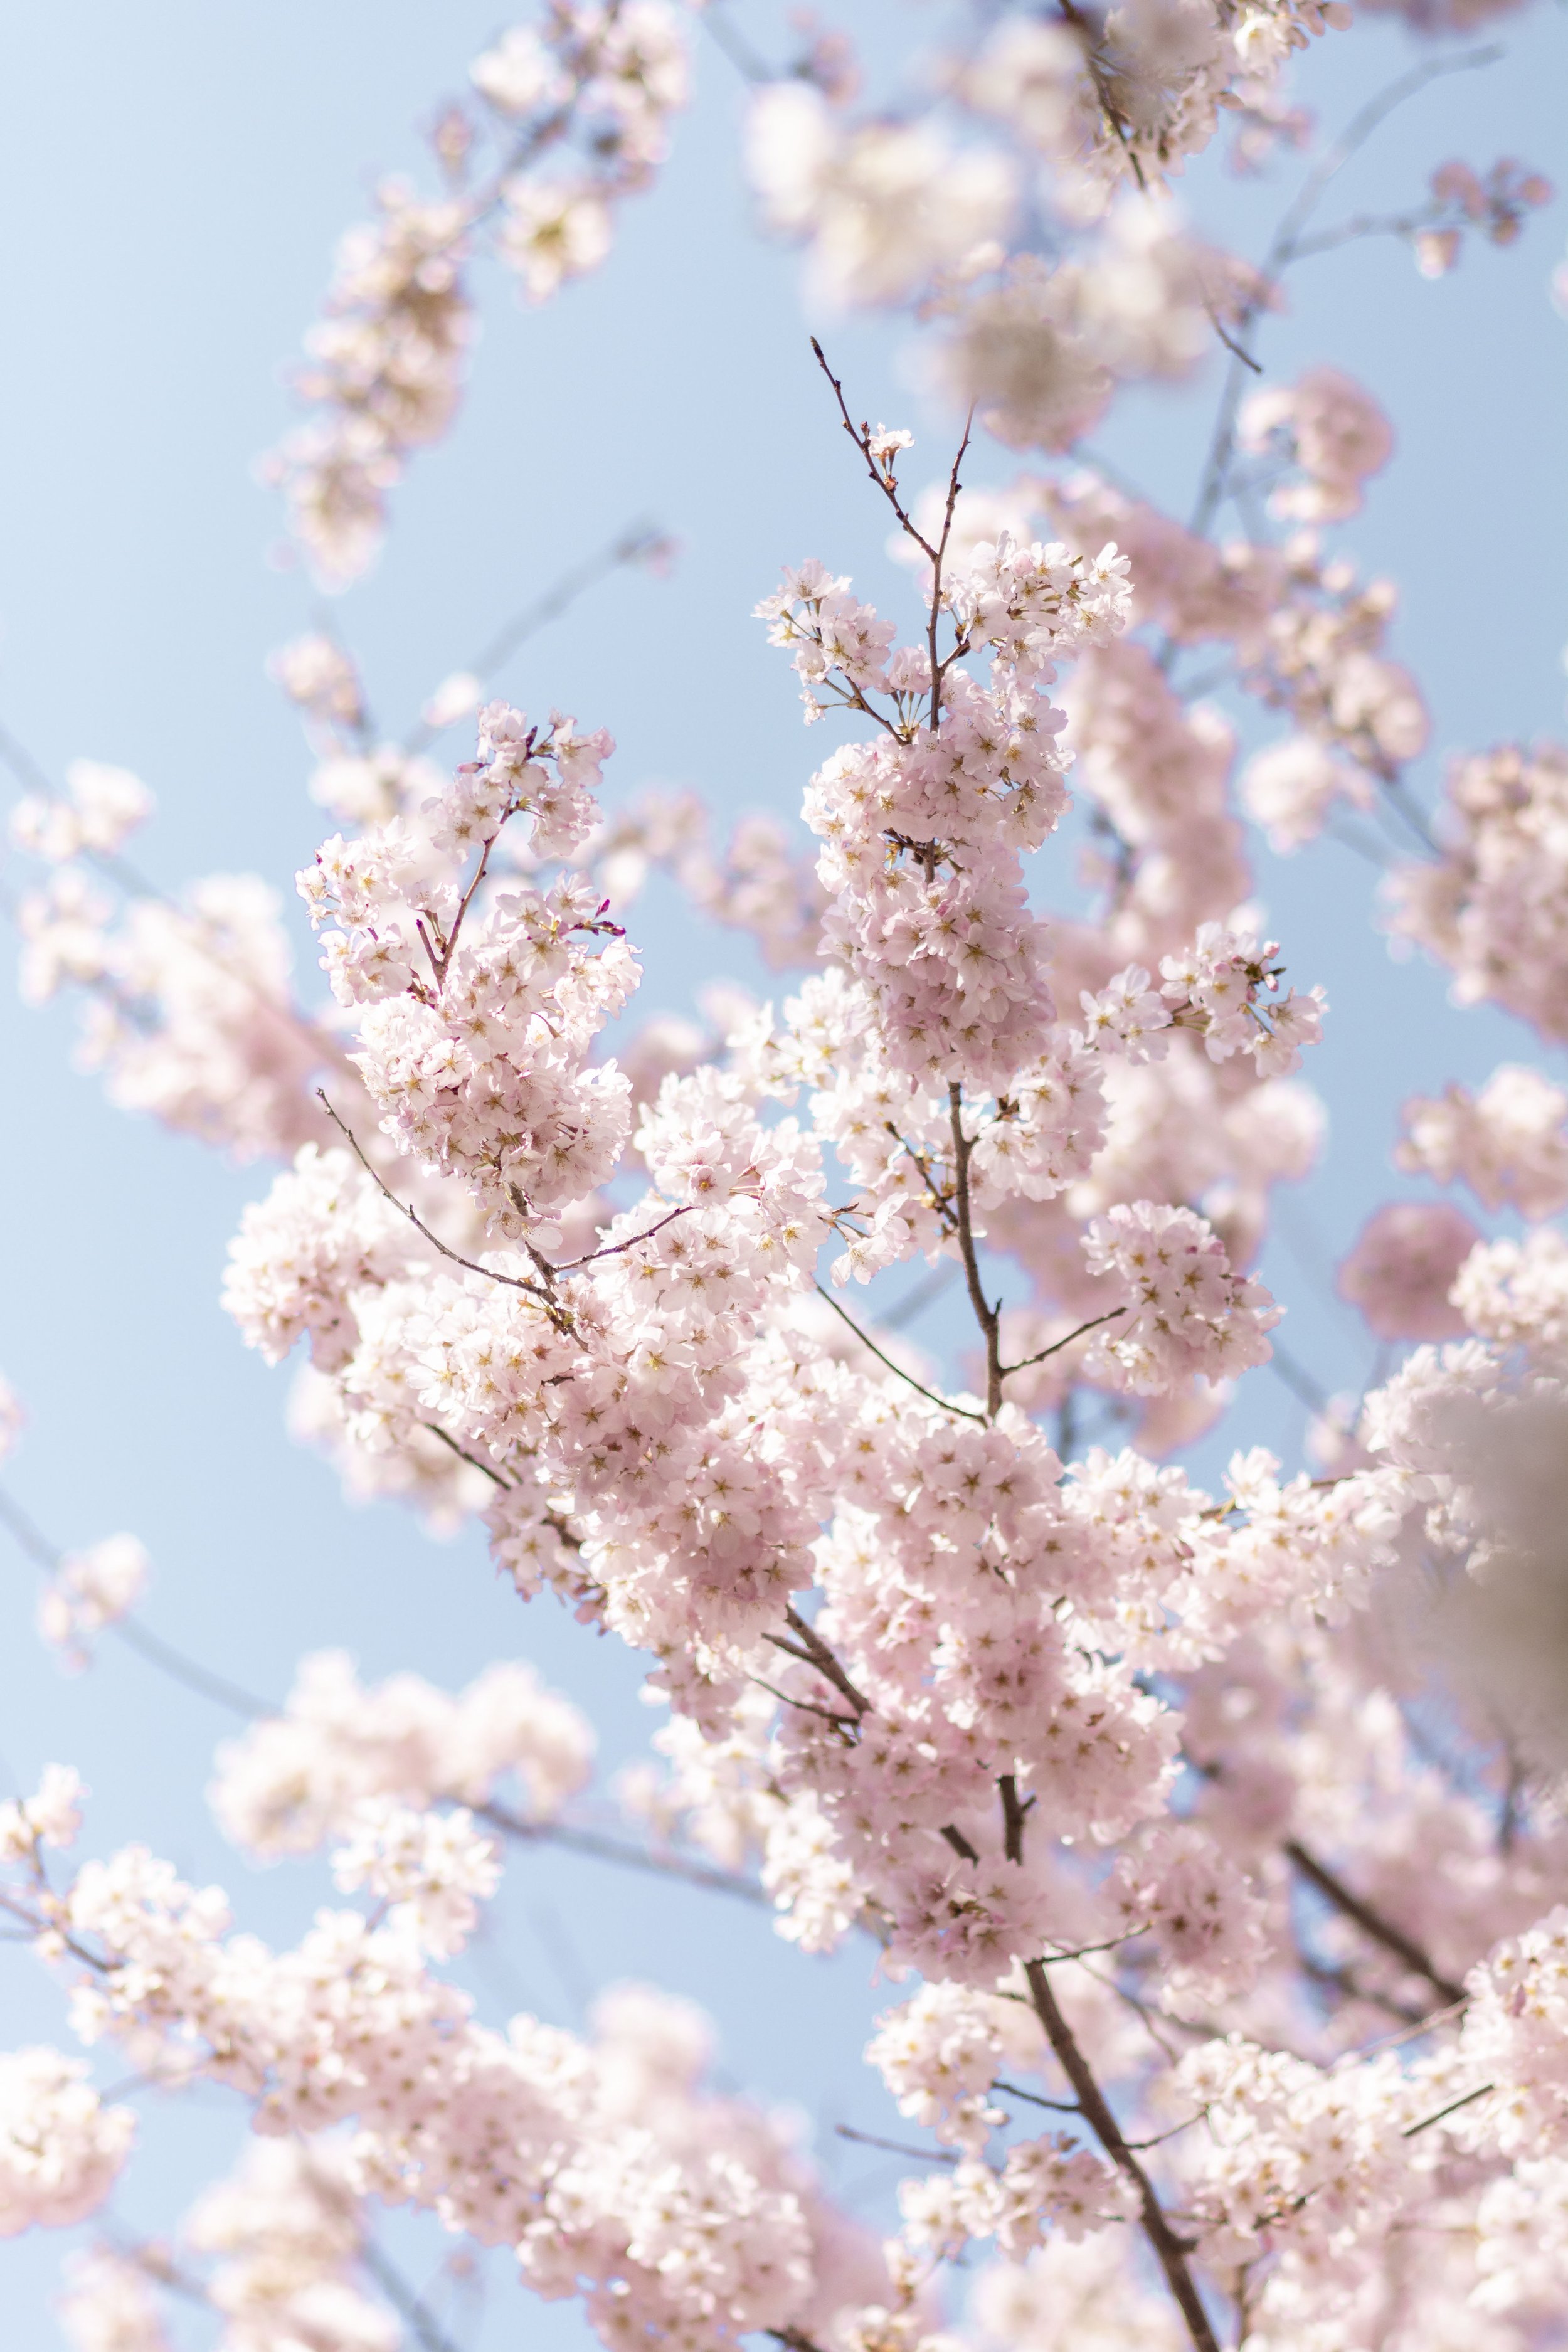 washington-dc-cherry-blossoms-2022-11-08-03-04-34-utc.jpg